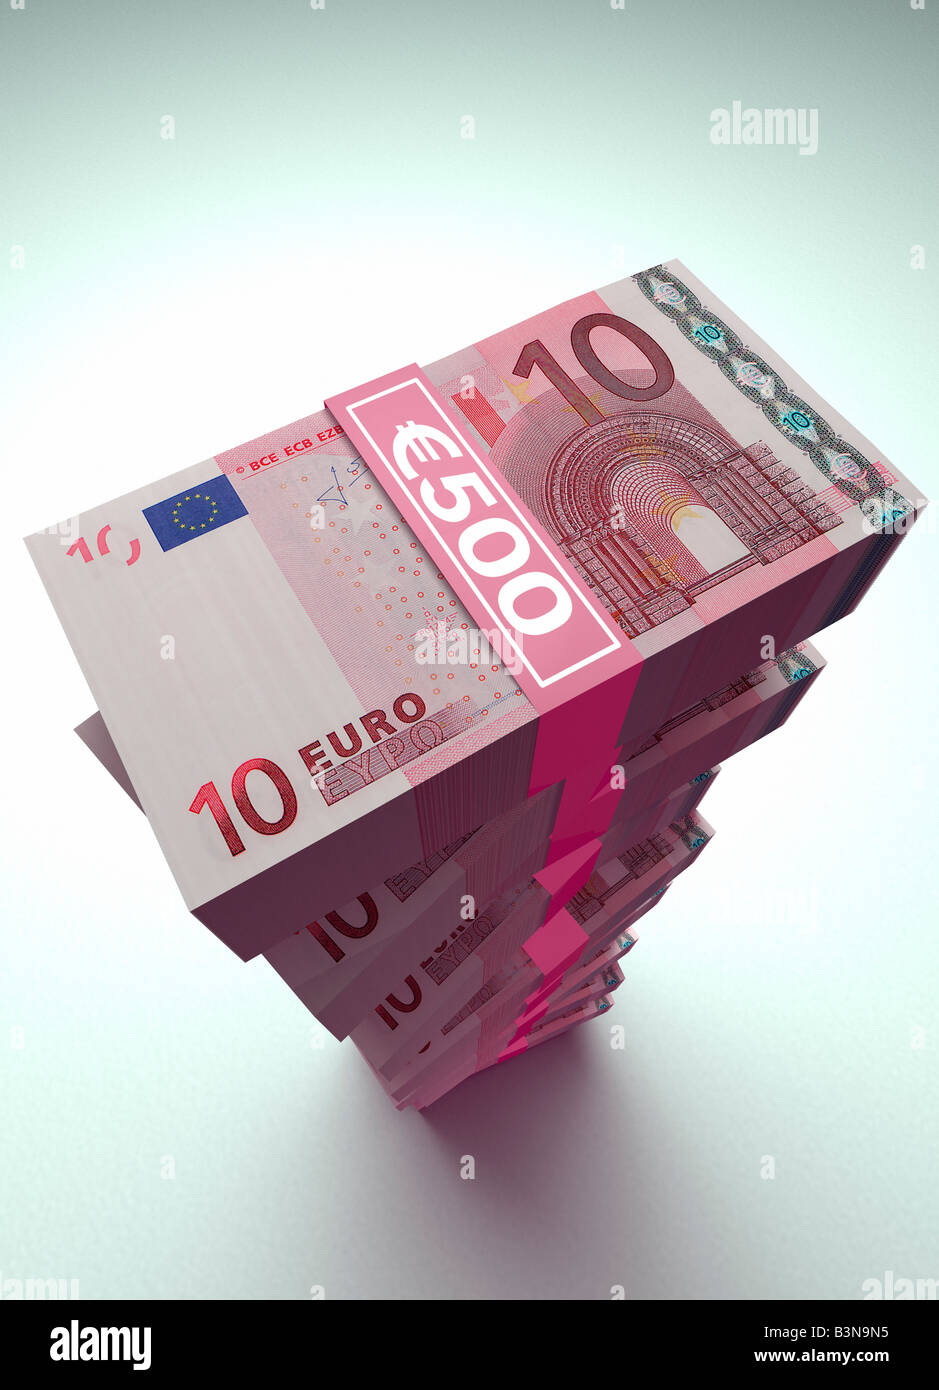 Large stack of £10 Euro bank notes on plain background Stock Photo - Alamy